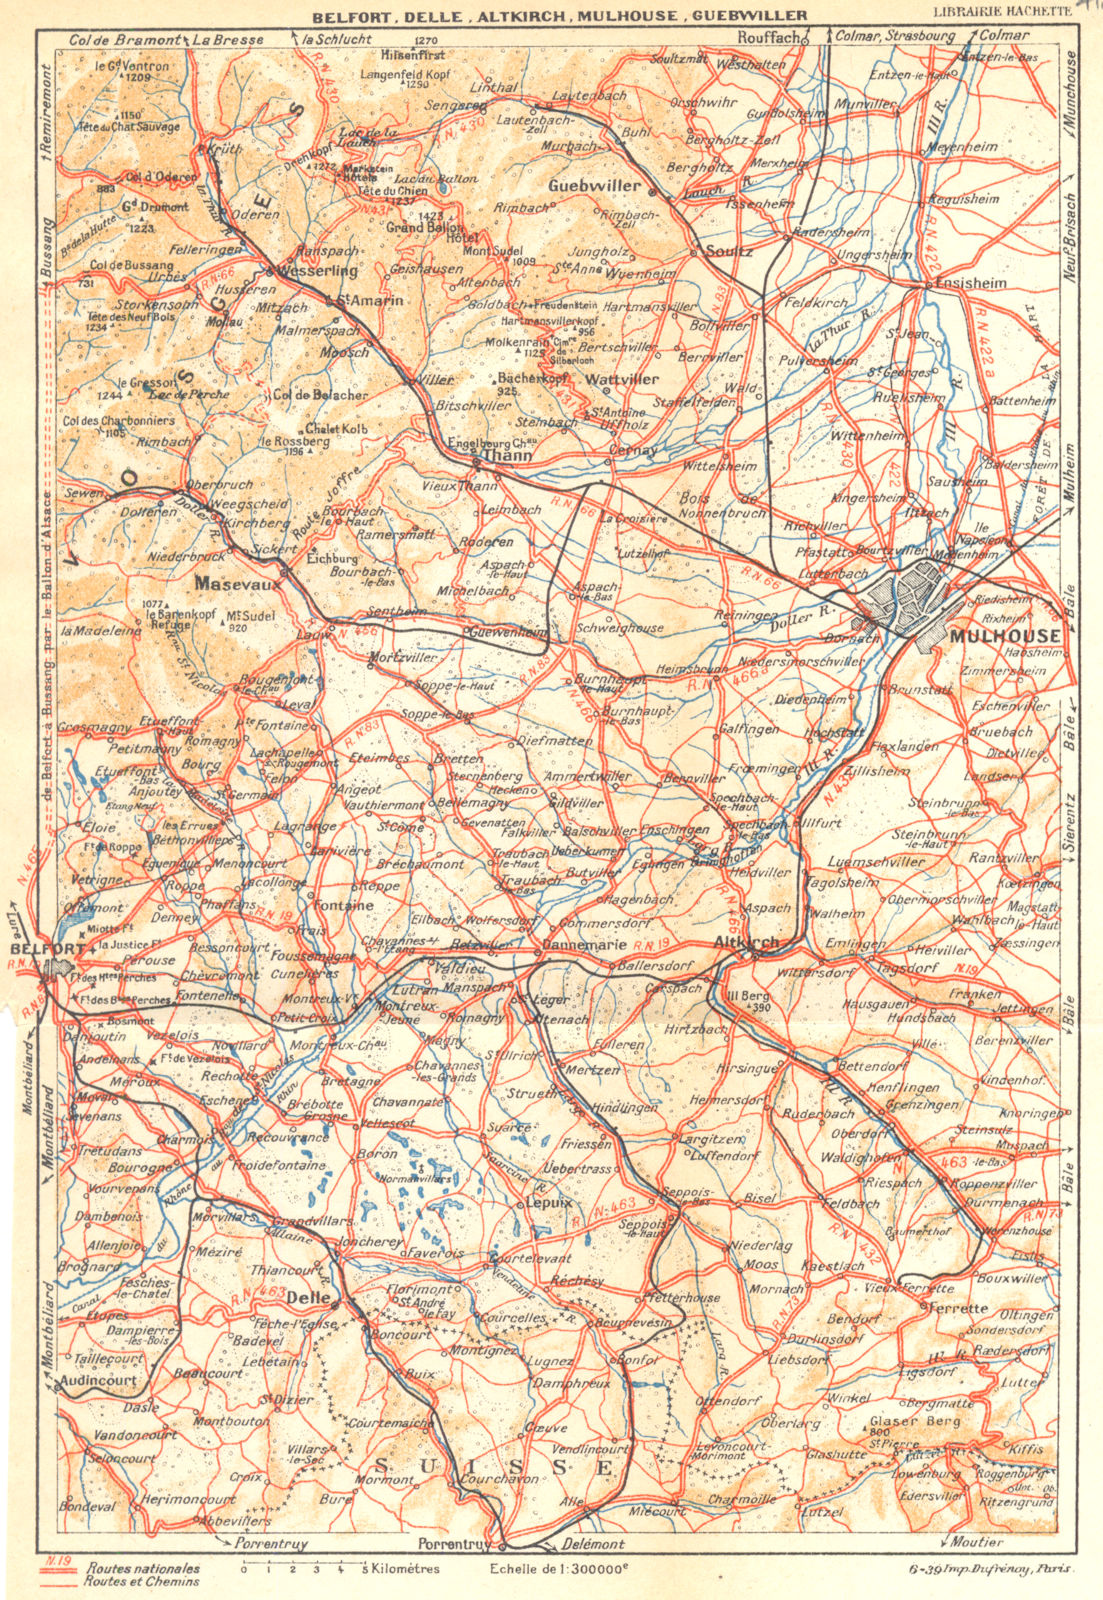 HAUT- RHIN. Belfort, Delle, Altkirch, Mulhouse, Guebwiller 1939 old map